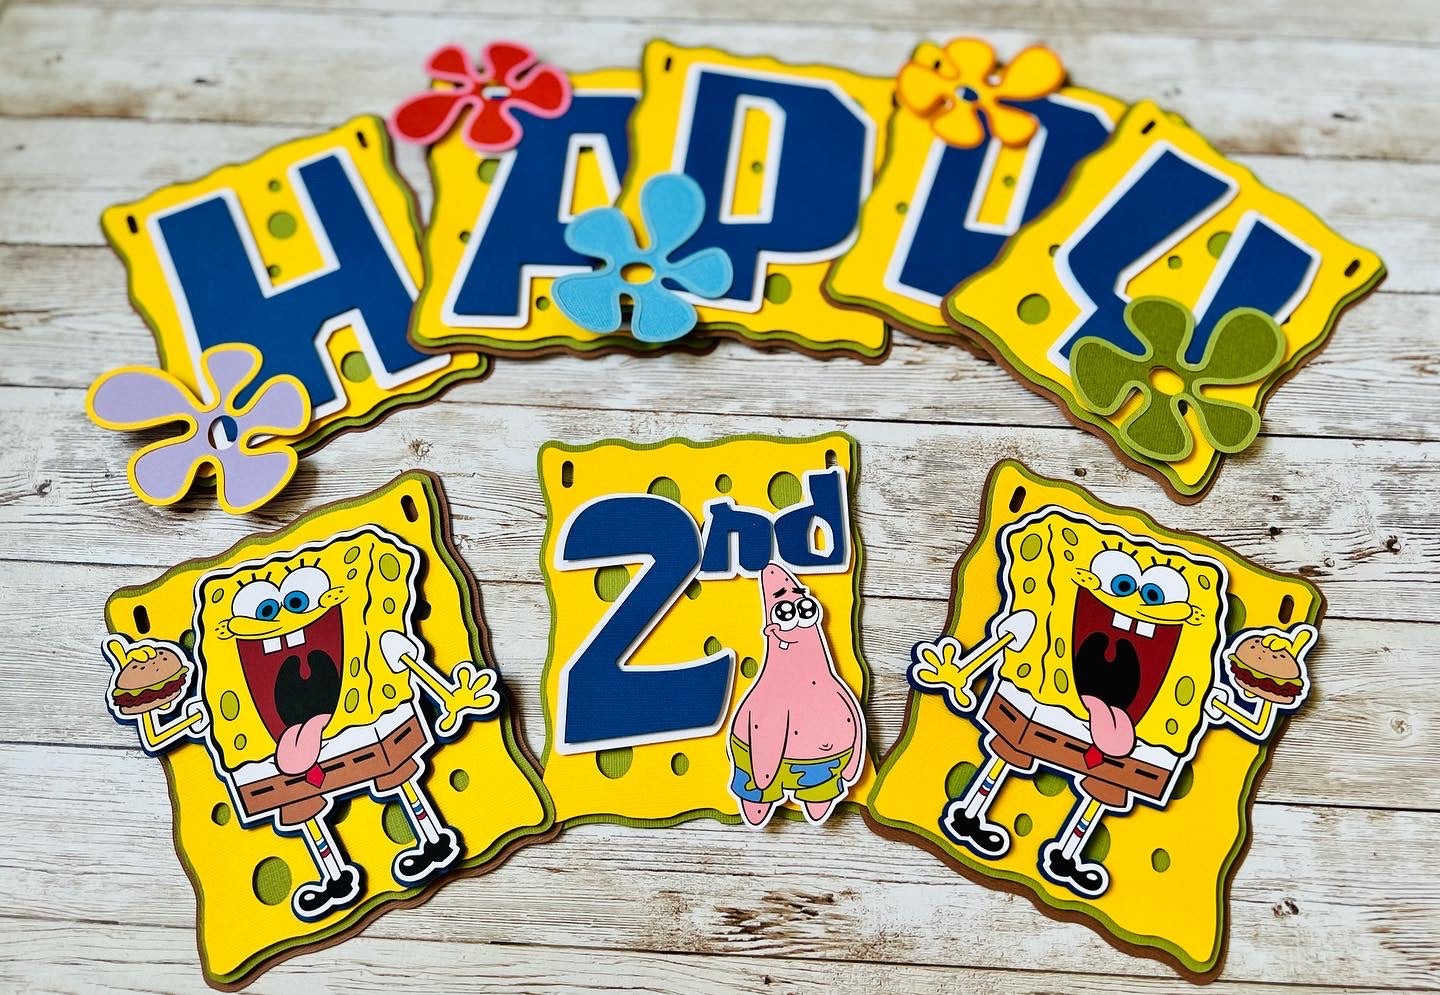 Spongebob birthday banner